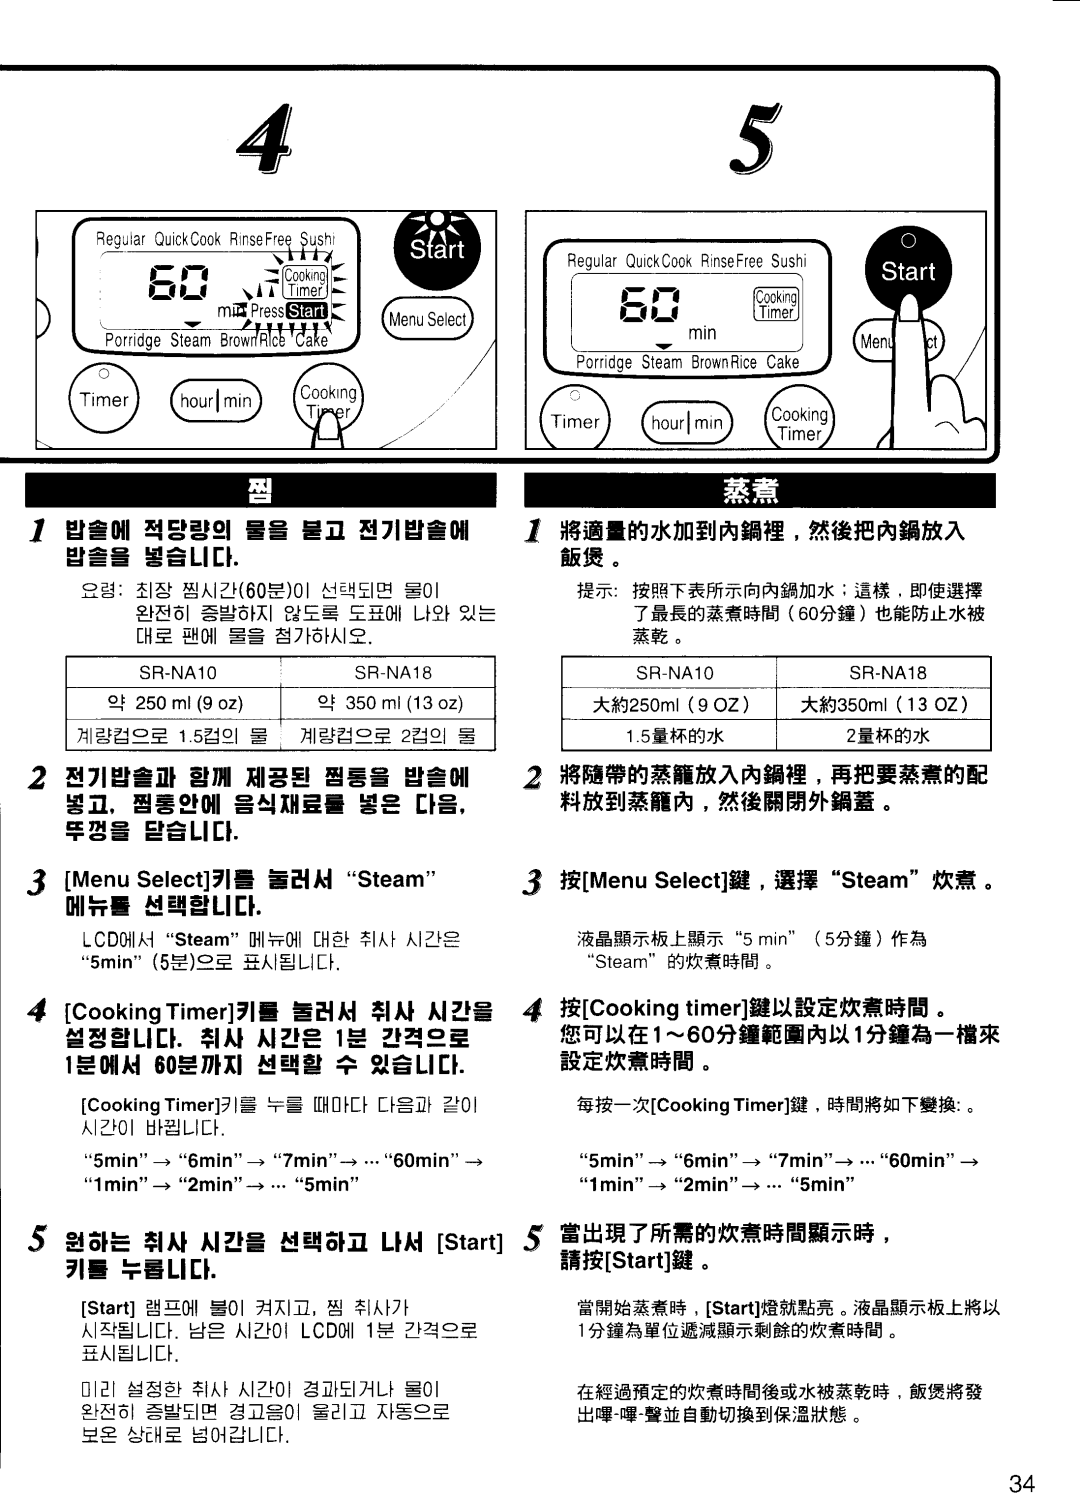 Panasonic SR-NA10, SR-NA18 manual 